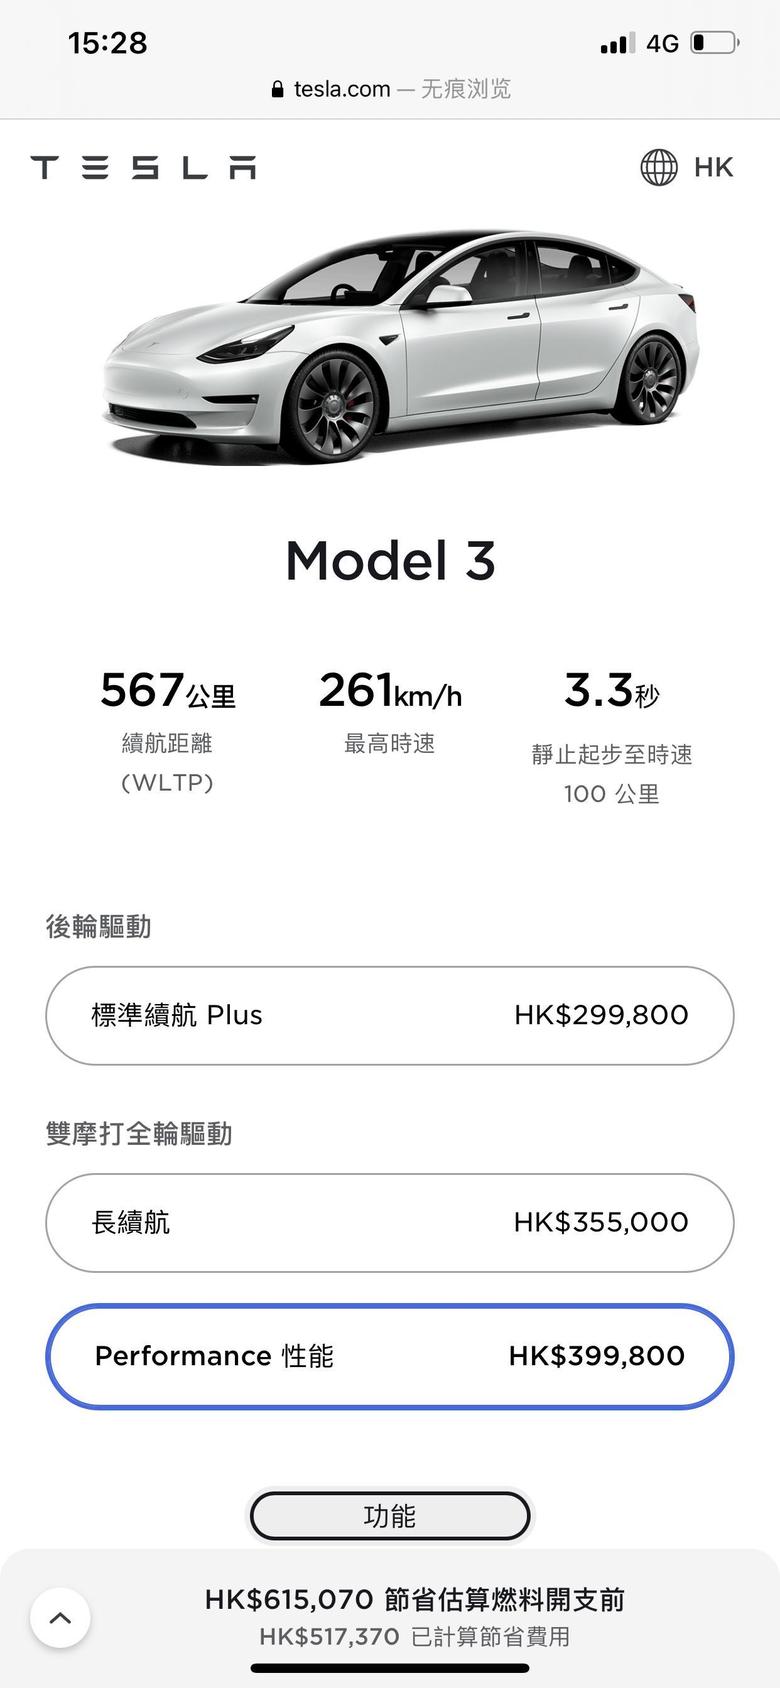 model 3 香港官网m3p更新了好像，换了20寸轮毂？加了续航？记不太清了有老哥解读一下吗，下周就要提3P了